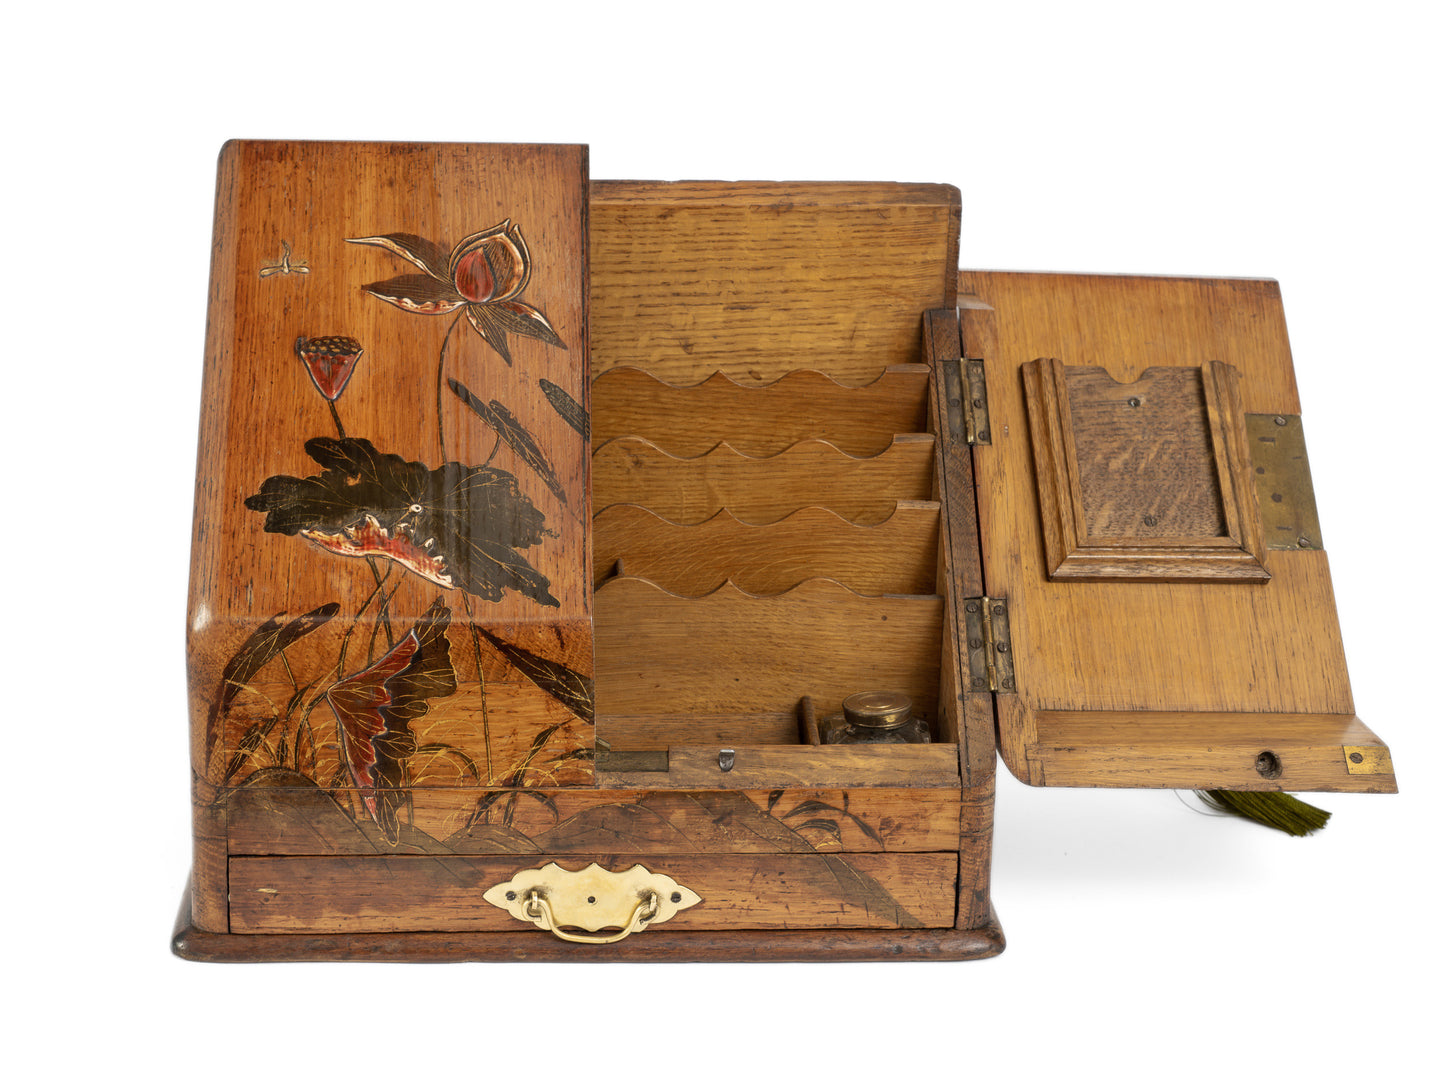 Antique Victorian Wooden Stationery Box with Japanese Shibayama Decoration c1880 (Code 2165)